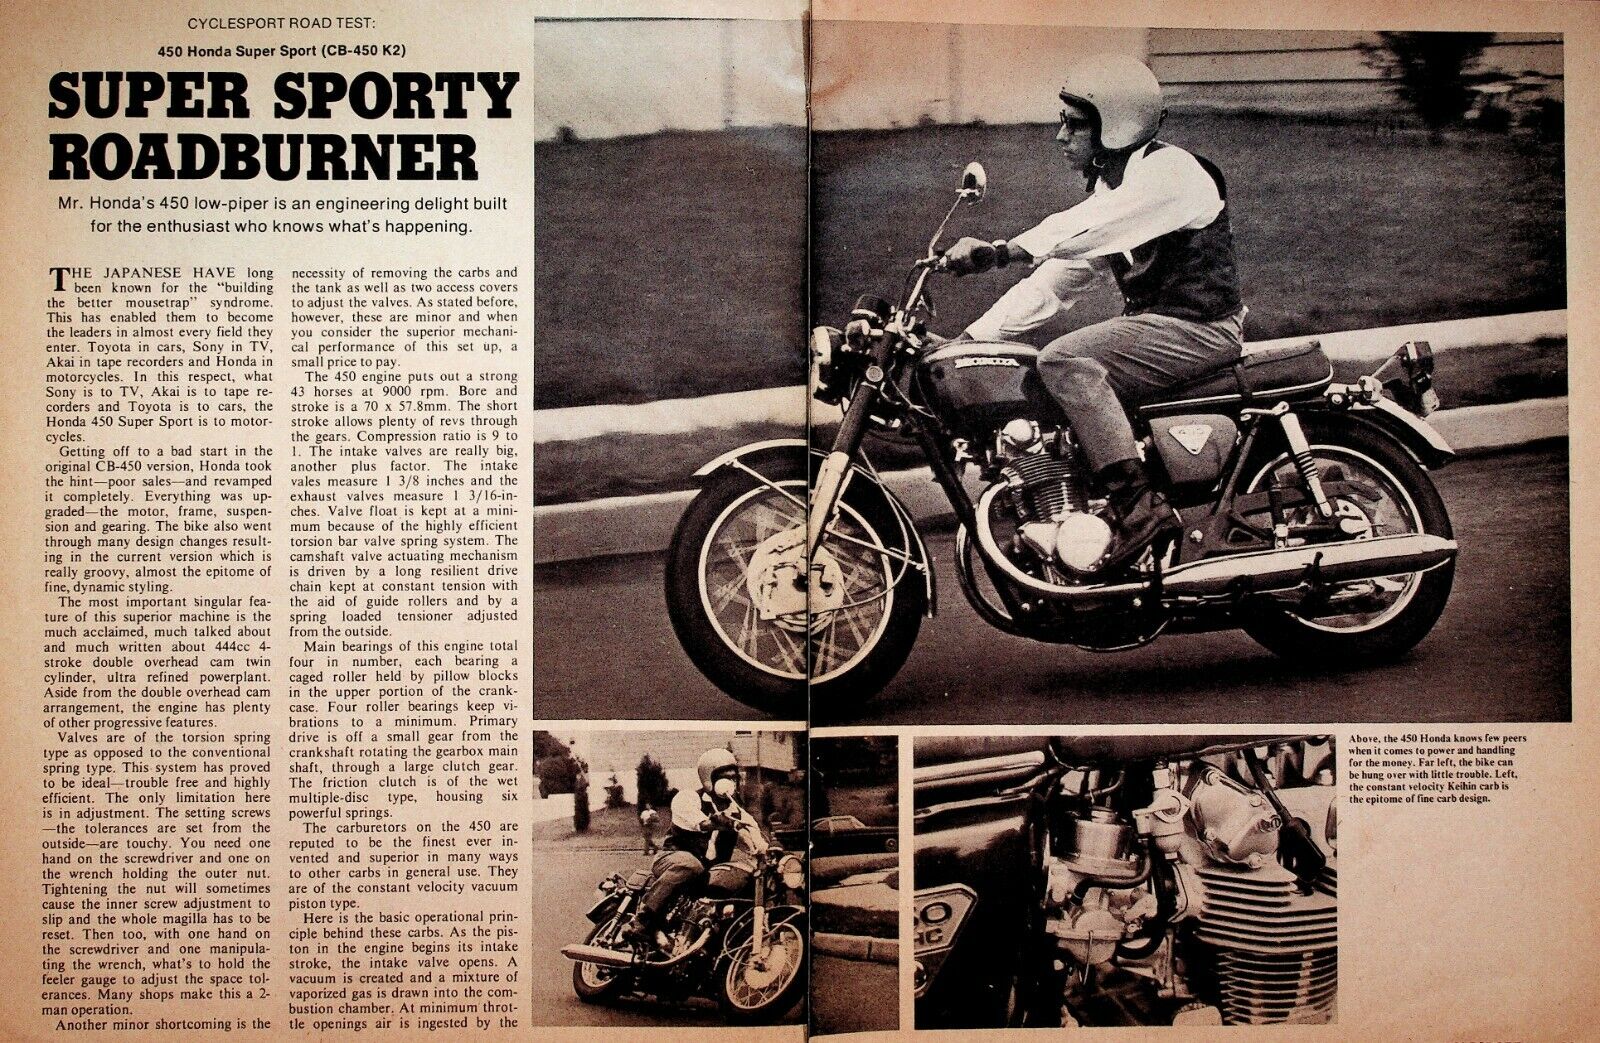 1970 Honda 450 Super Sport CB-450 K2 - 5-Page Vintage Motorcycle Test Article